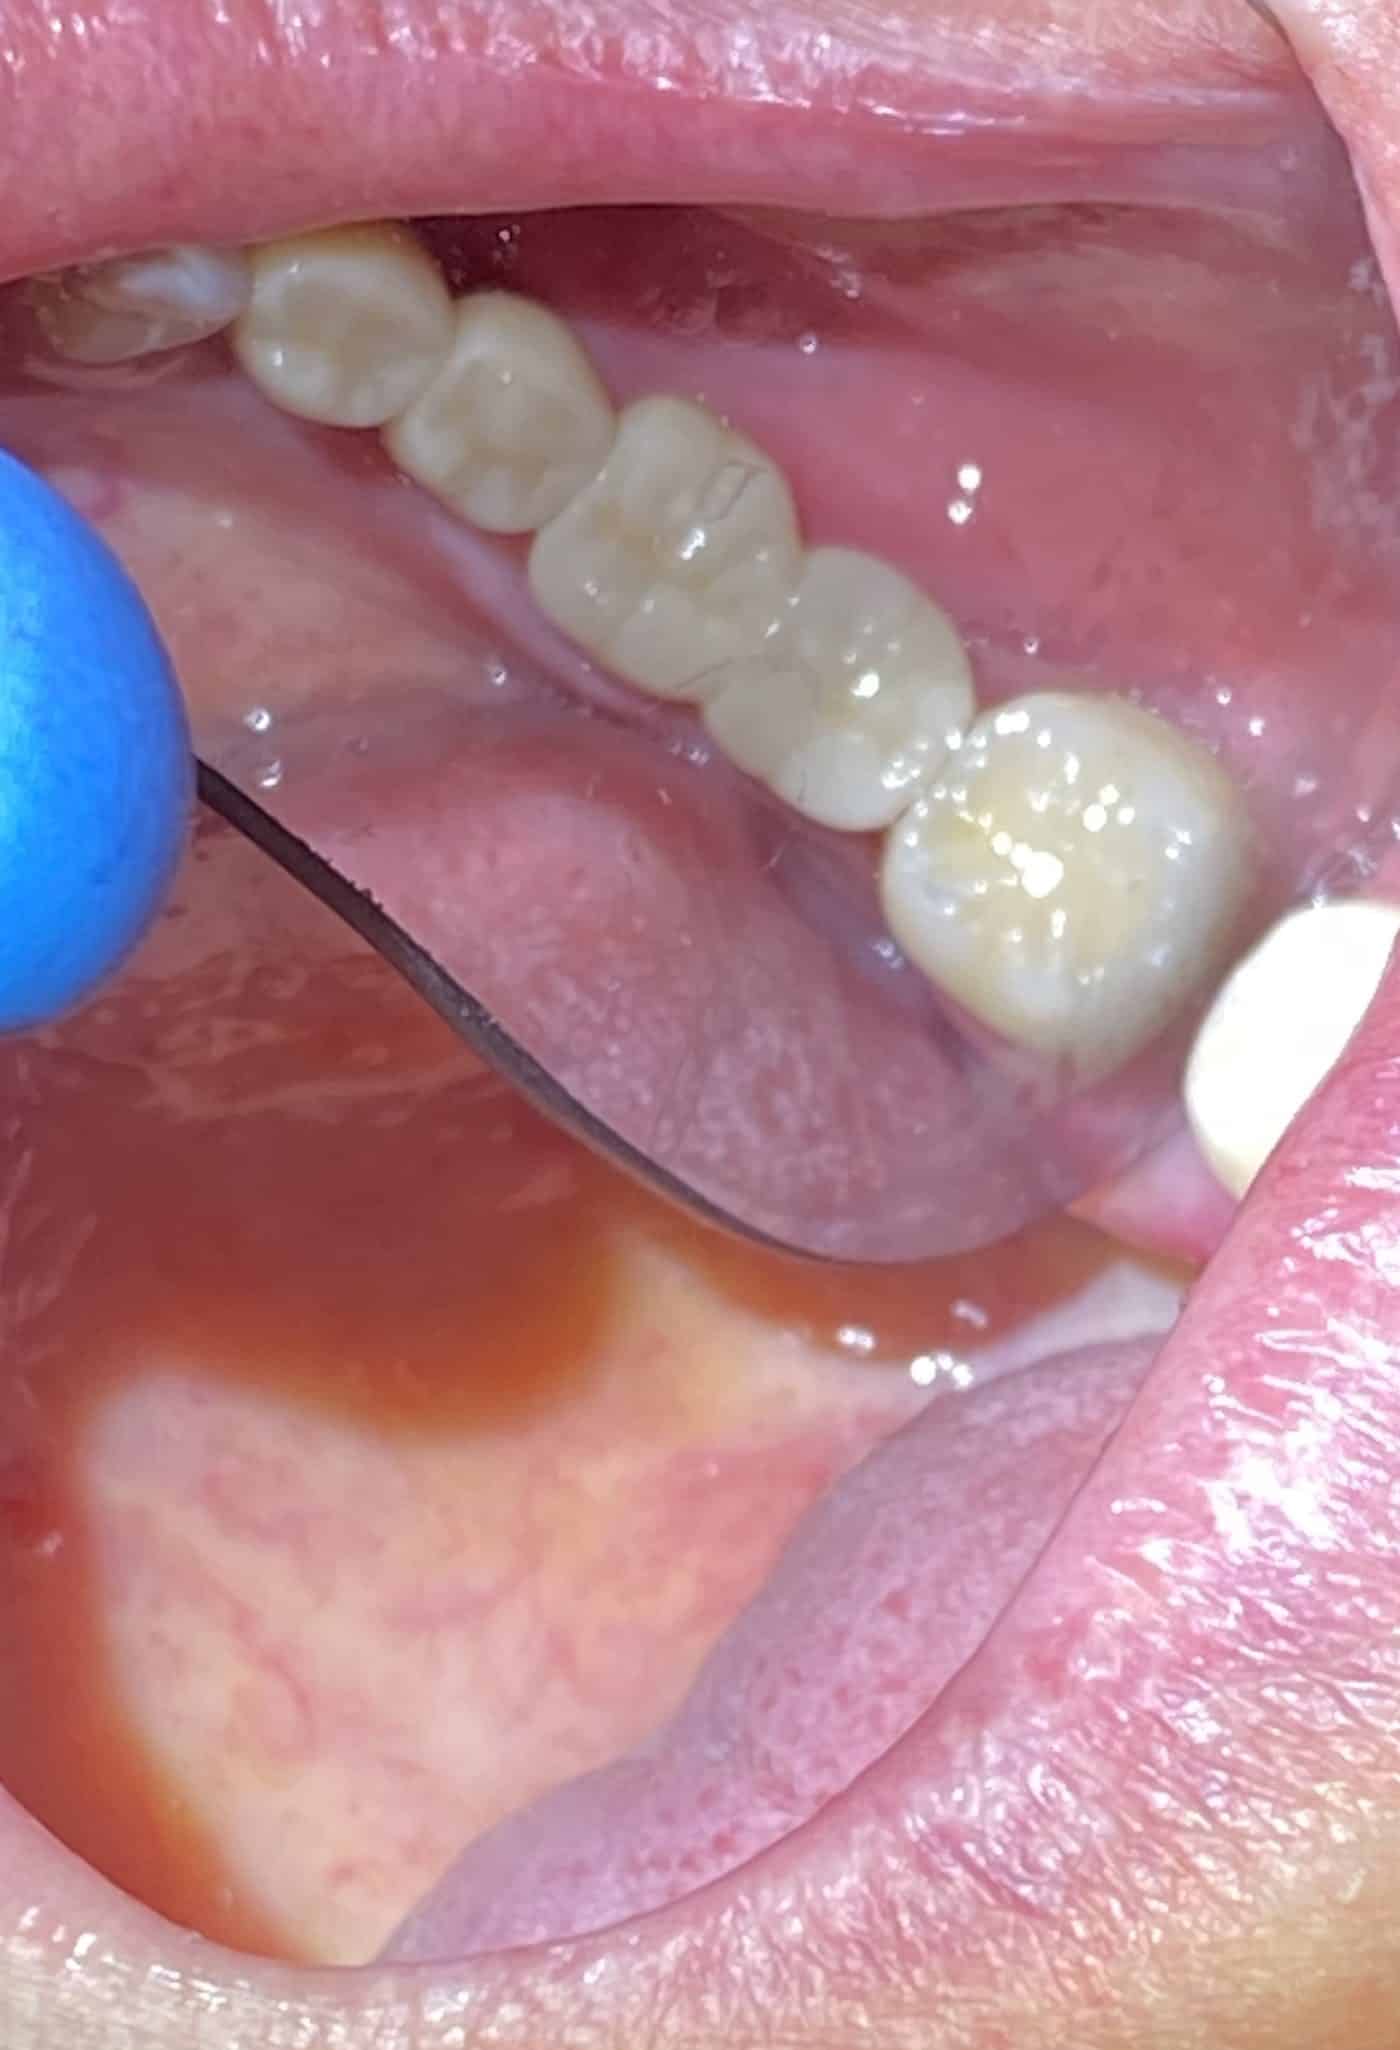 4 Dental Implants in the Posterior Region